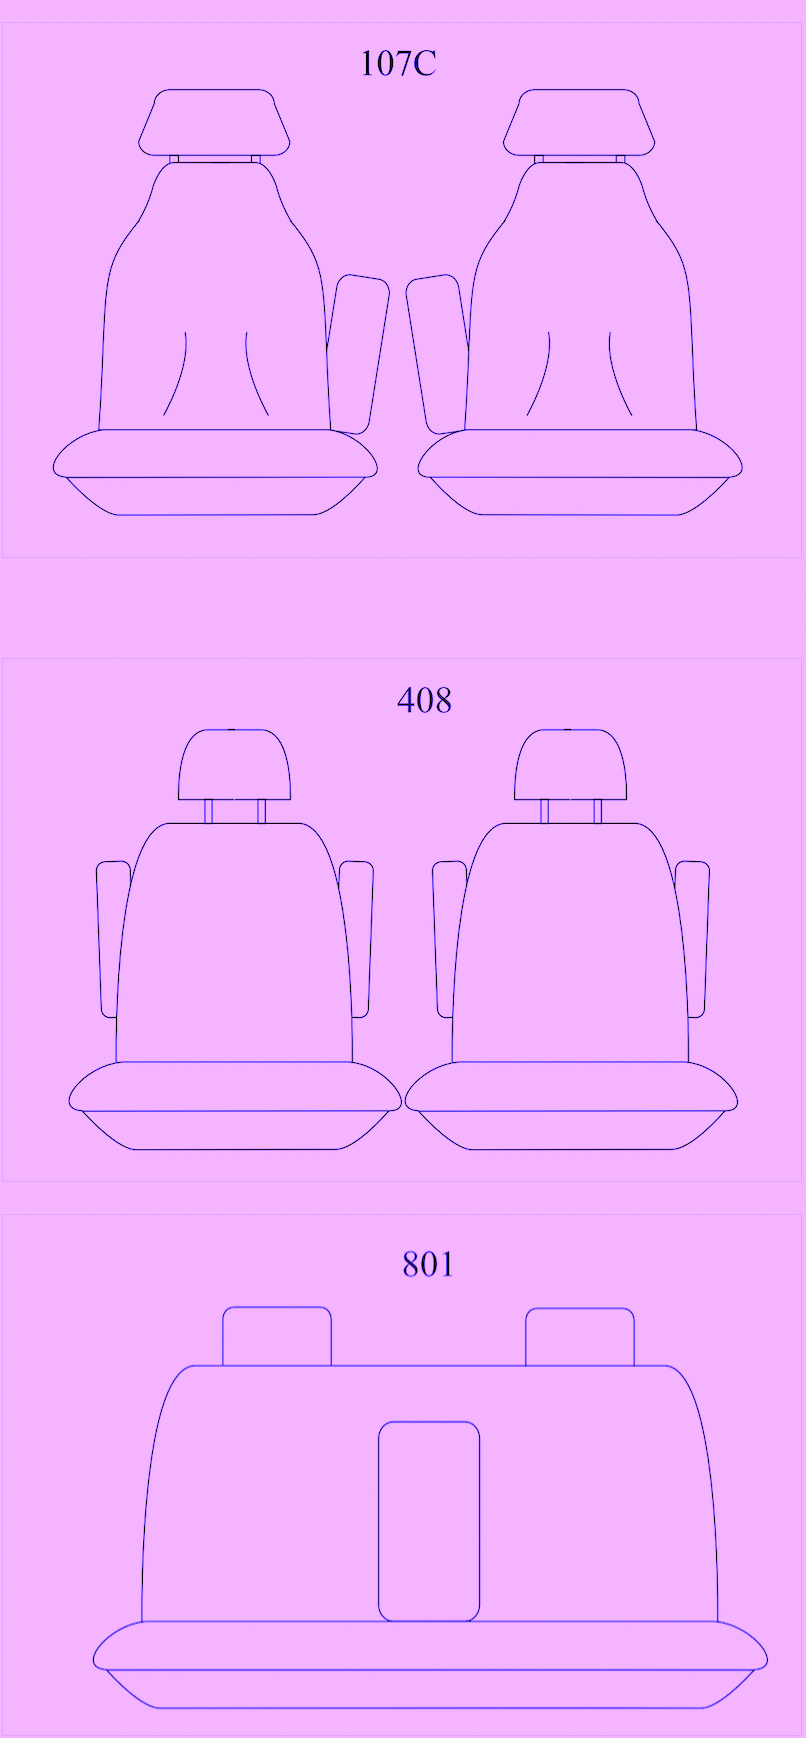 tarago seat covers